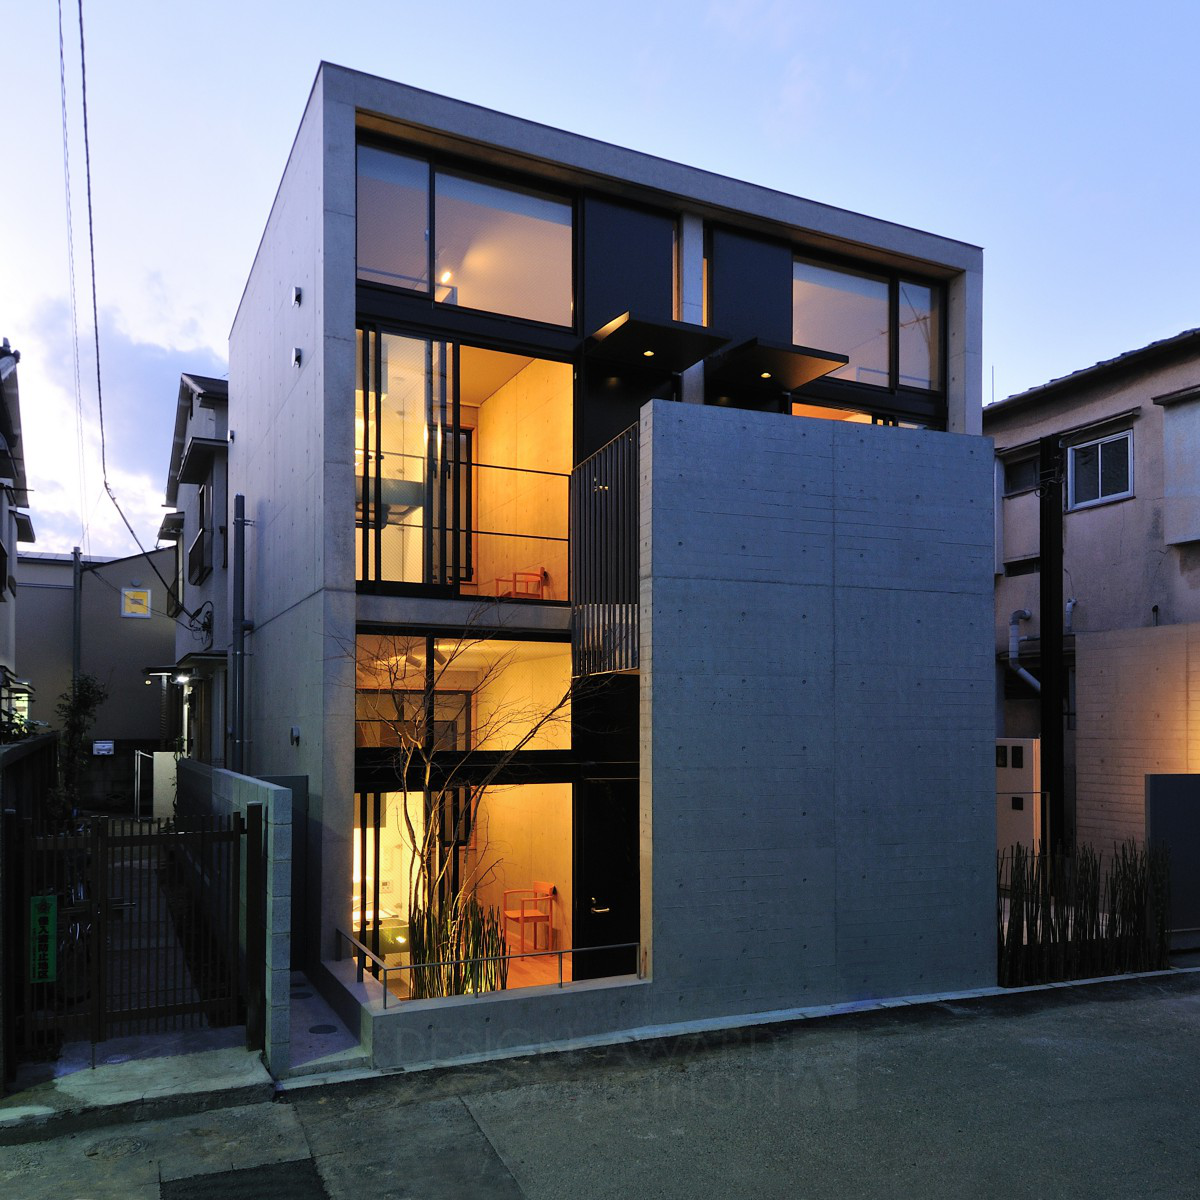 Hiroaki Iwasa wins Iron at the prestigious A' Architecture, Building and Structure Design Award with Amar Bari Apartment.